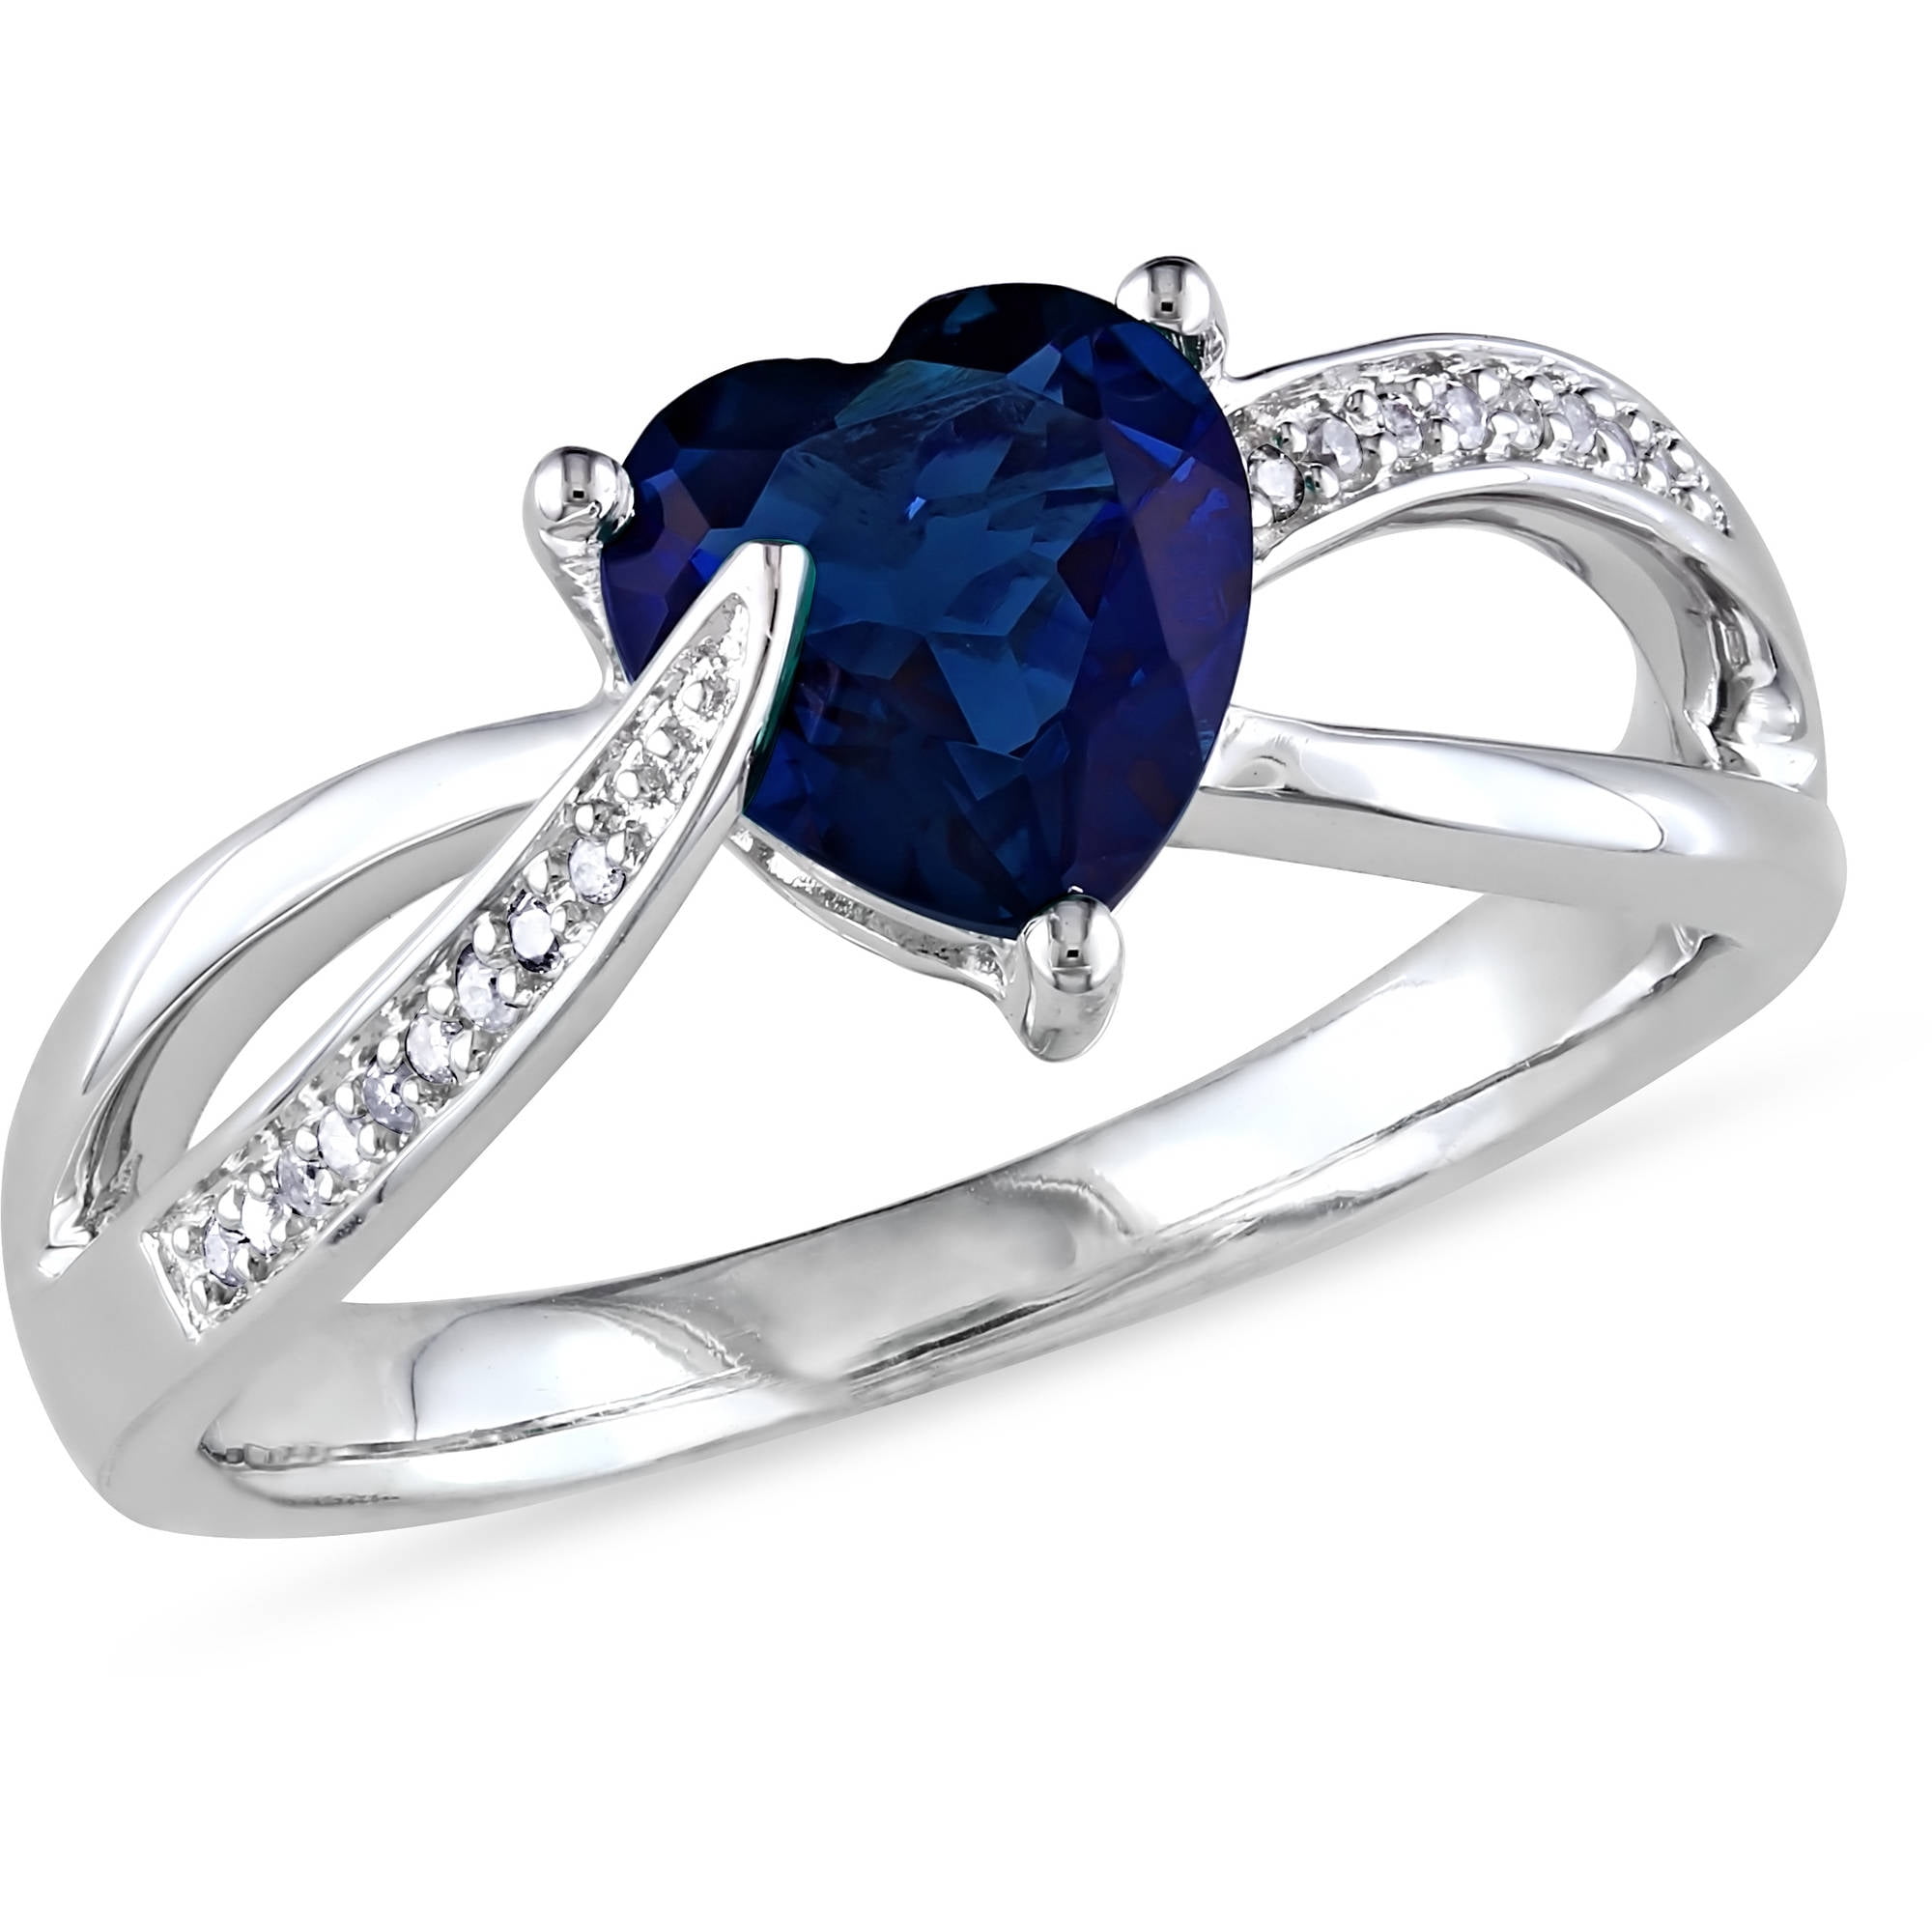 Openwork Princess Blue Sapphire Ring Women 14K White Gold Engagement Jewelry Hot